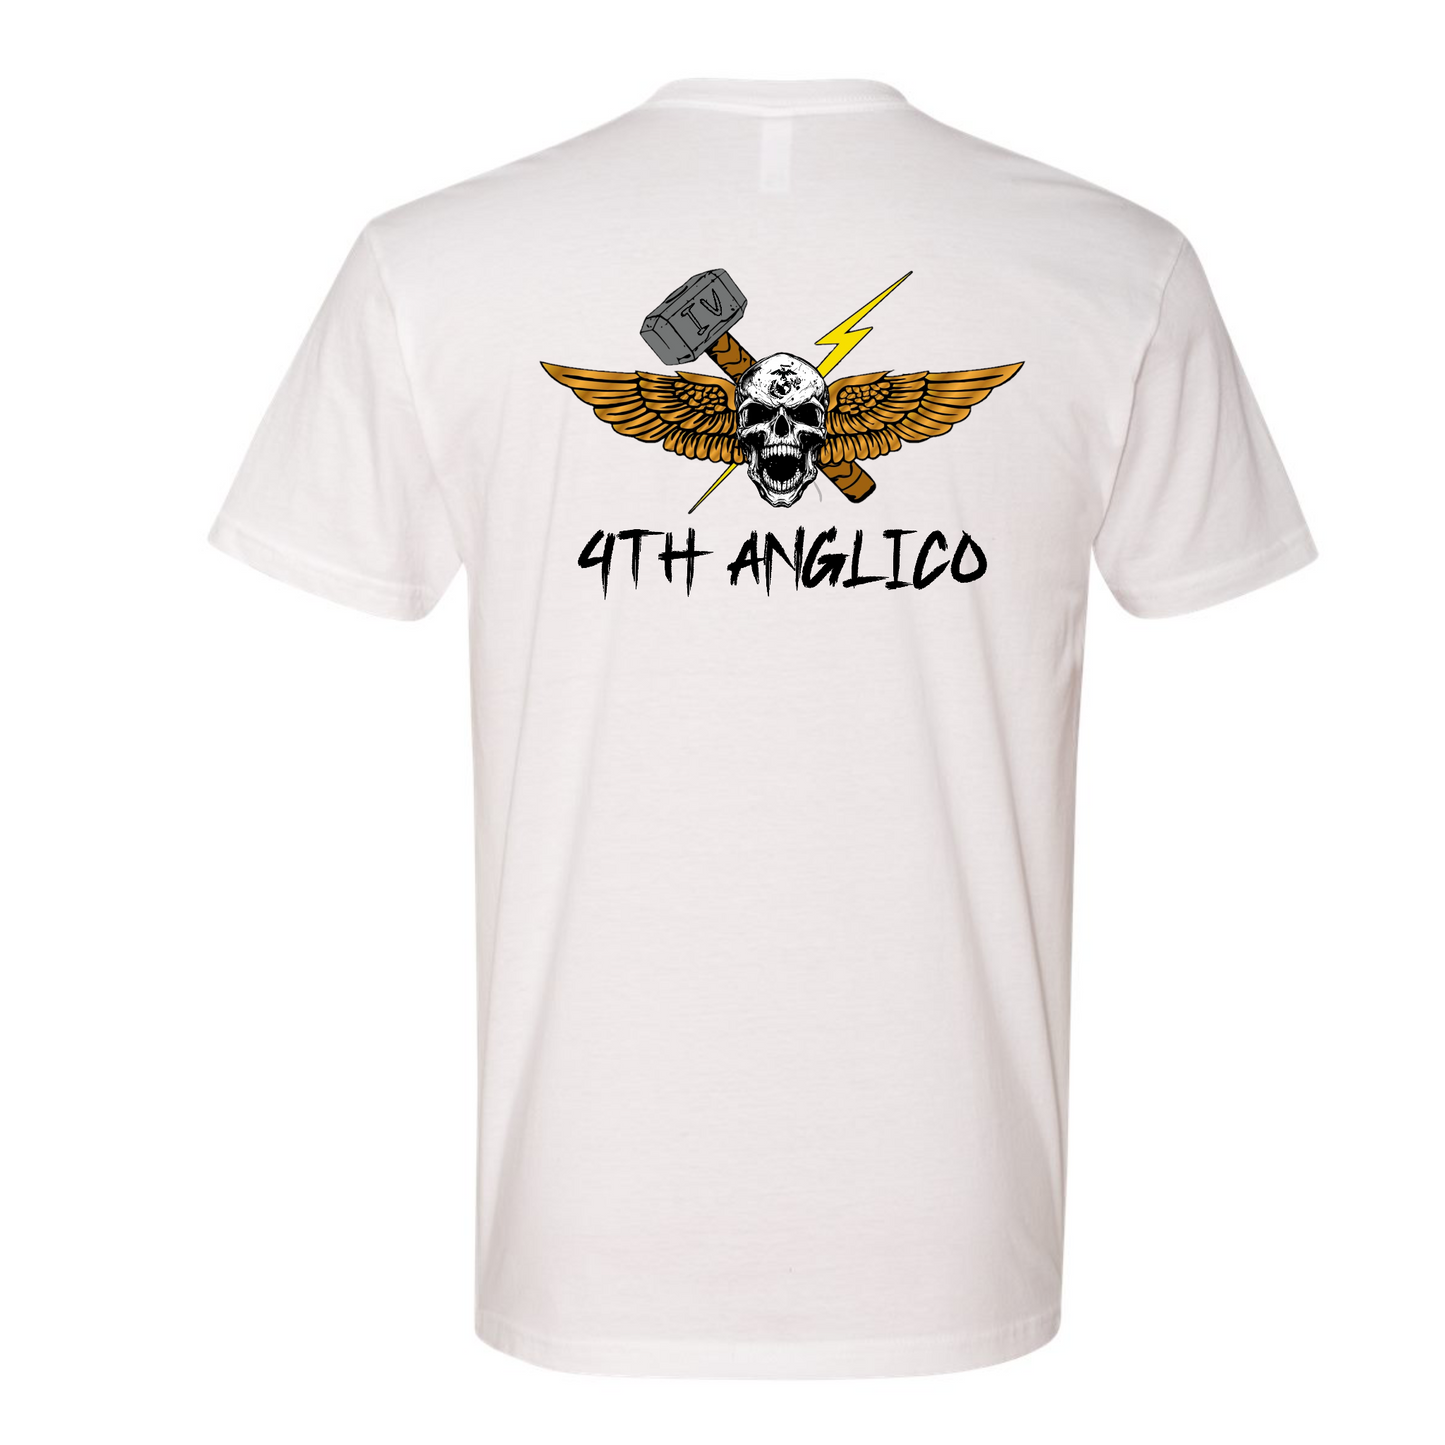 4TH ANGLICO new unit shirt